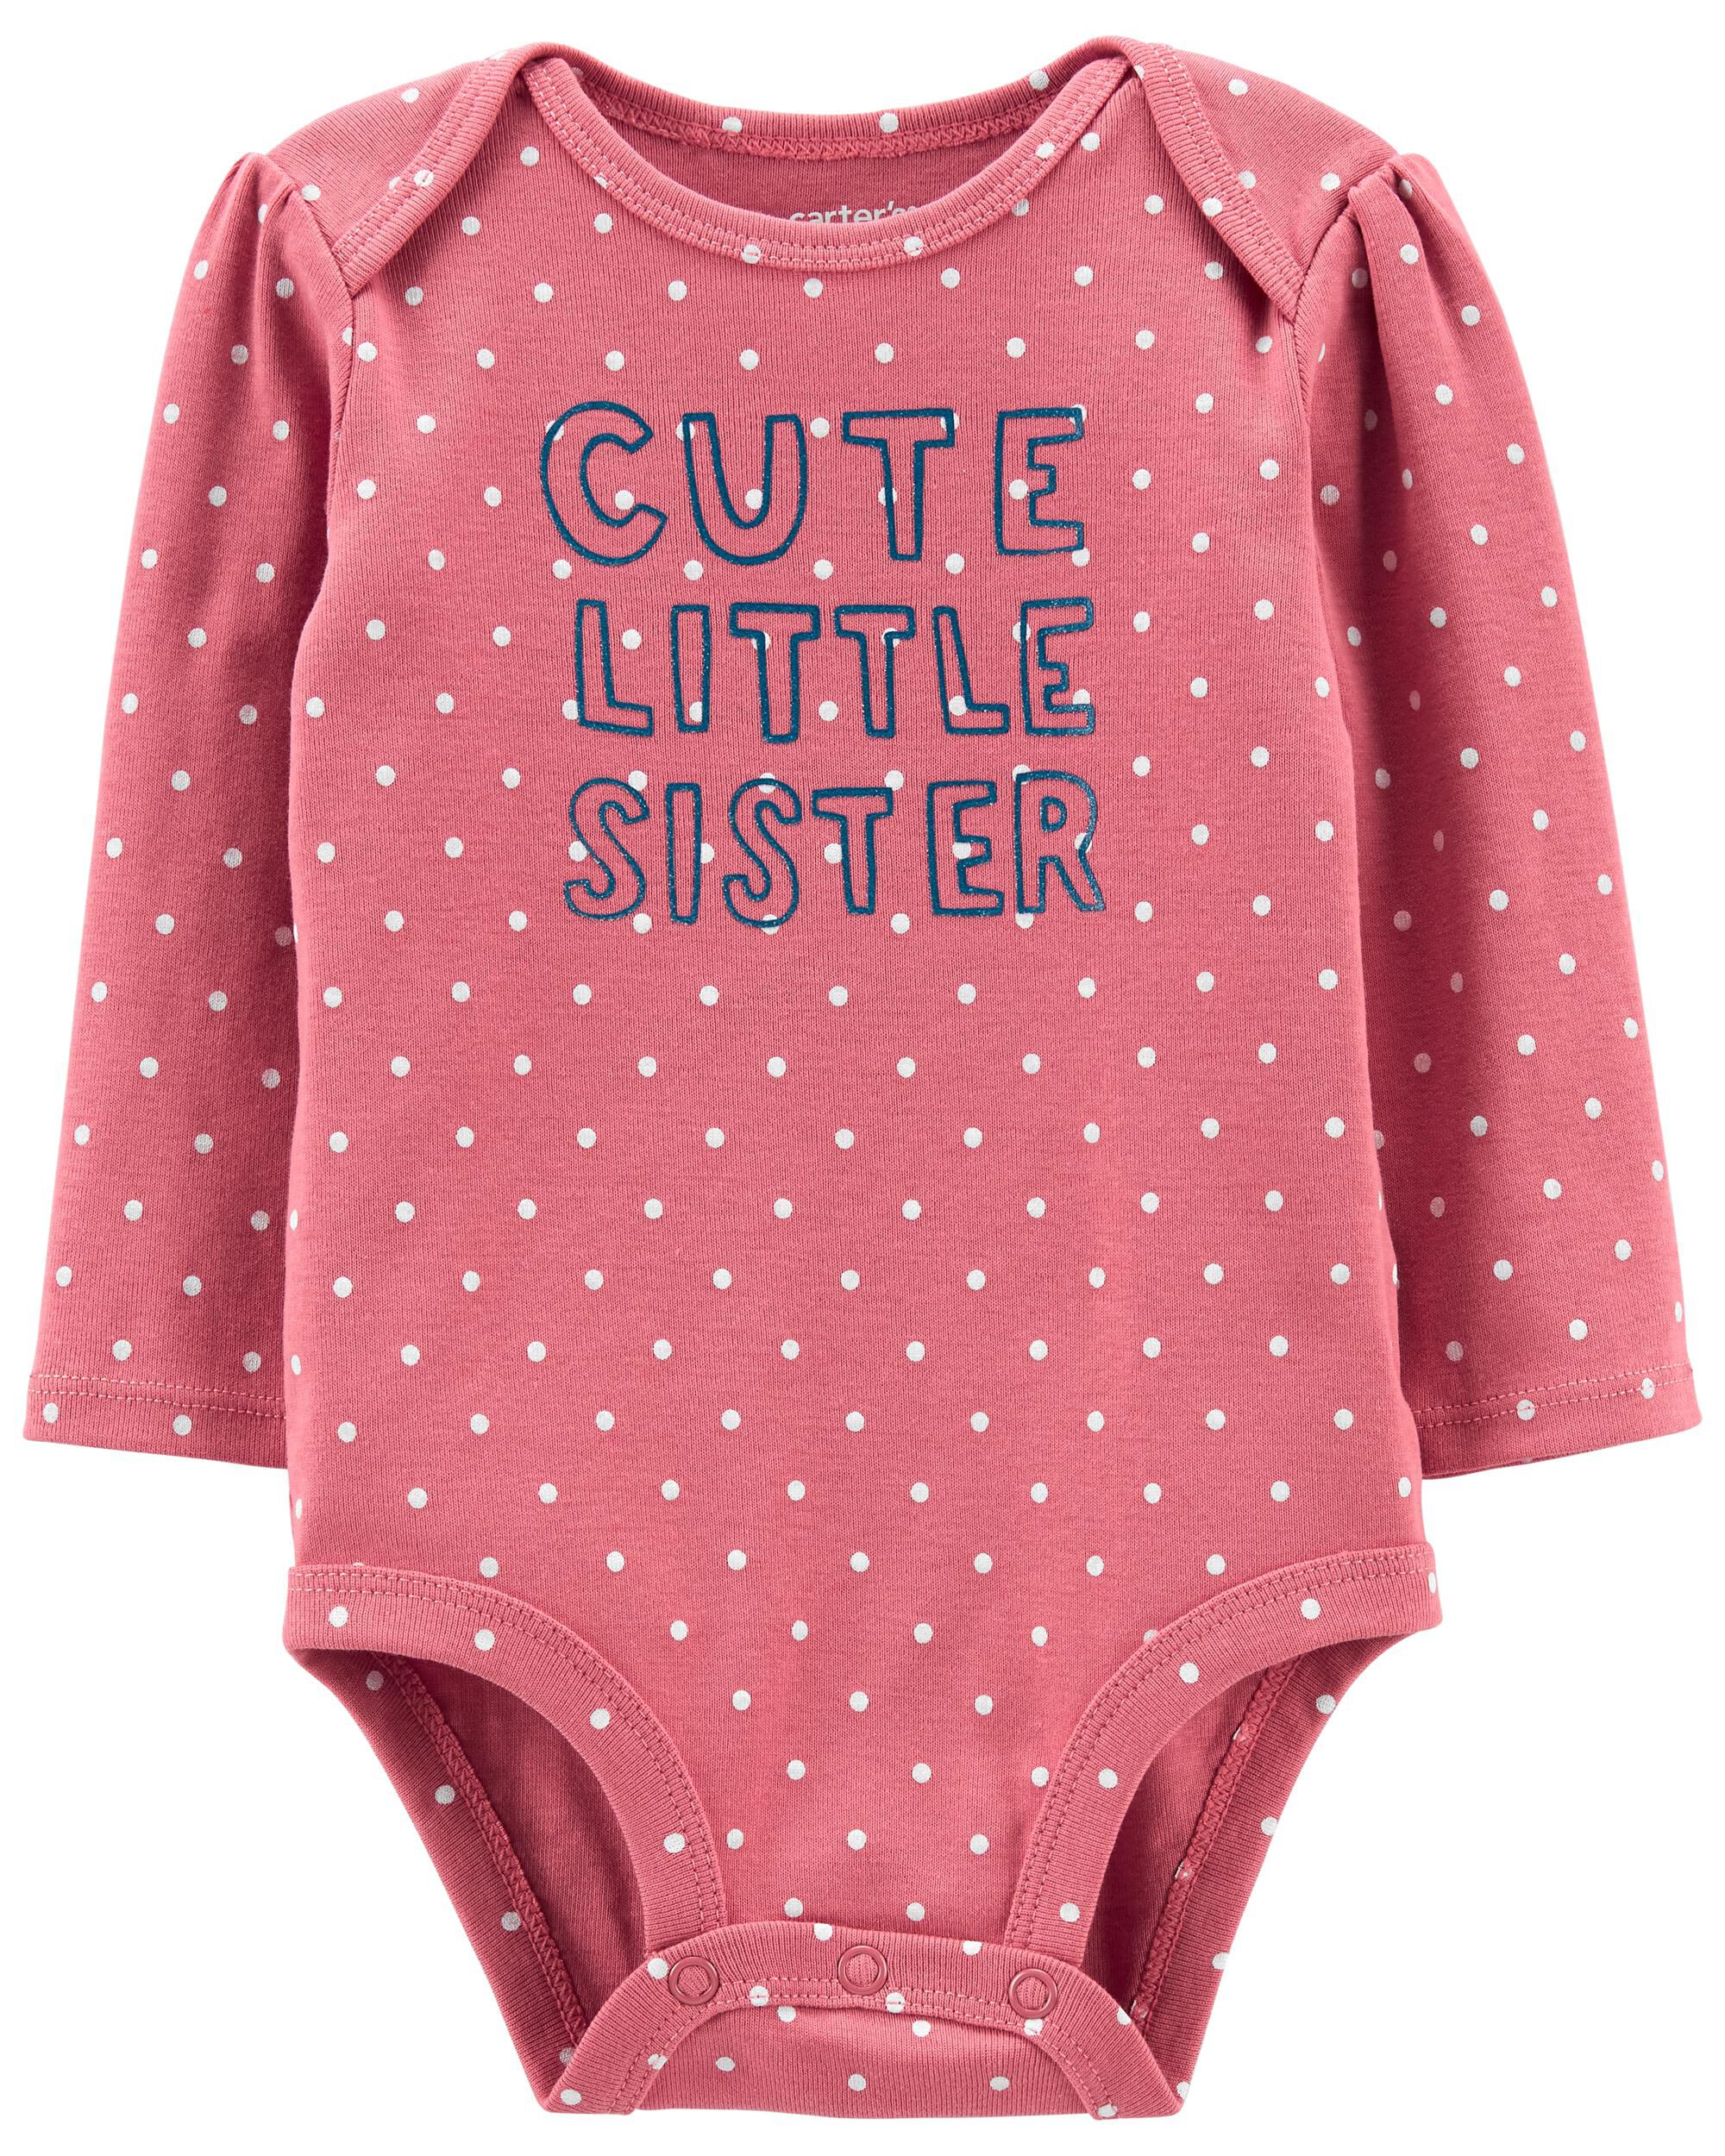 cute one piece body suit 0m 3m 6m 9m "Little Sister" baby GIRL onesieonesie 